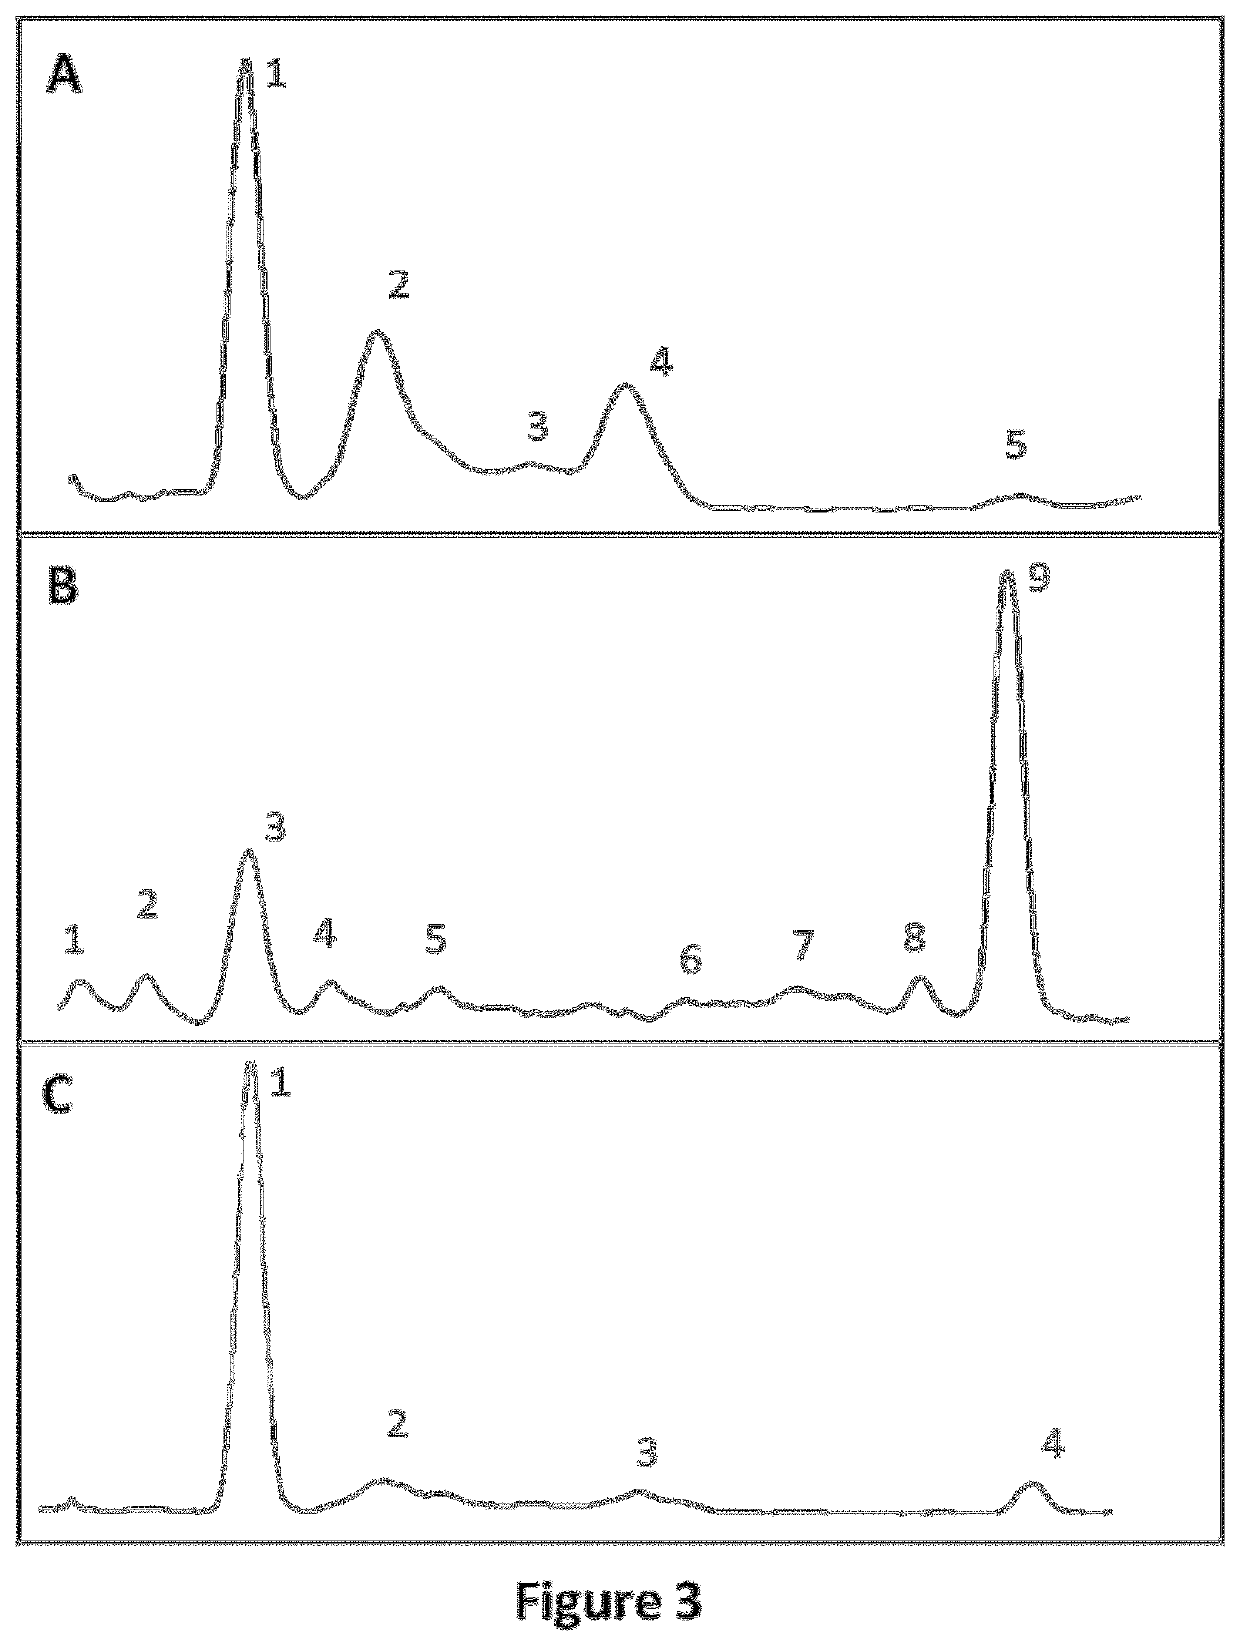 Method for specific identification of target biomolecules